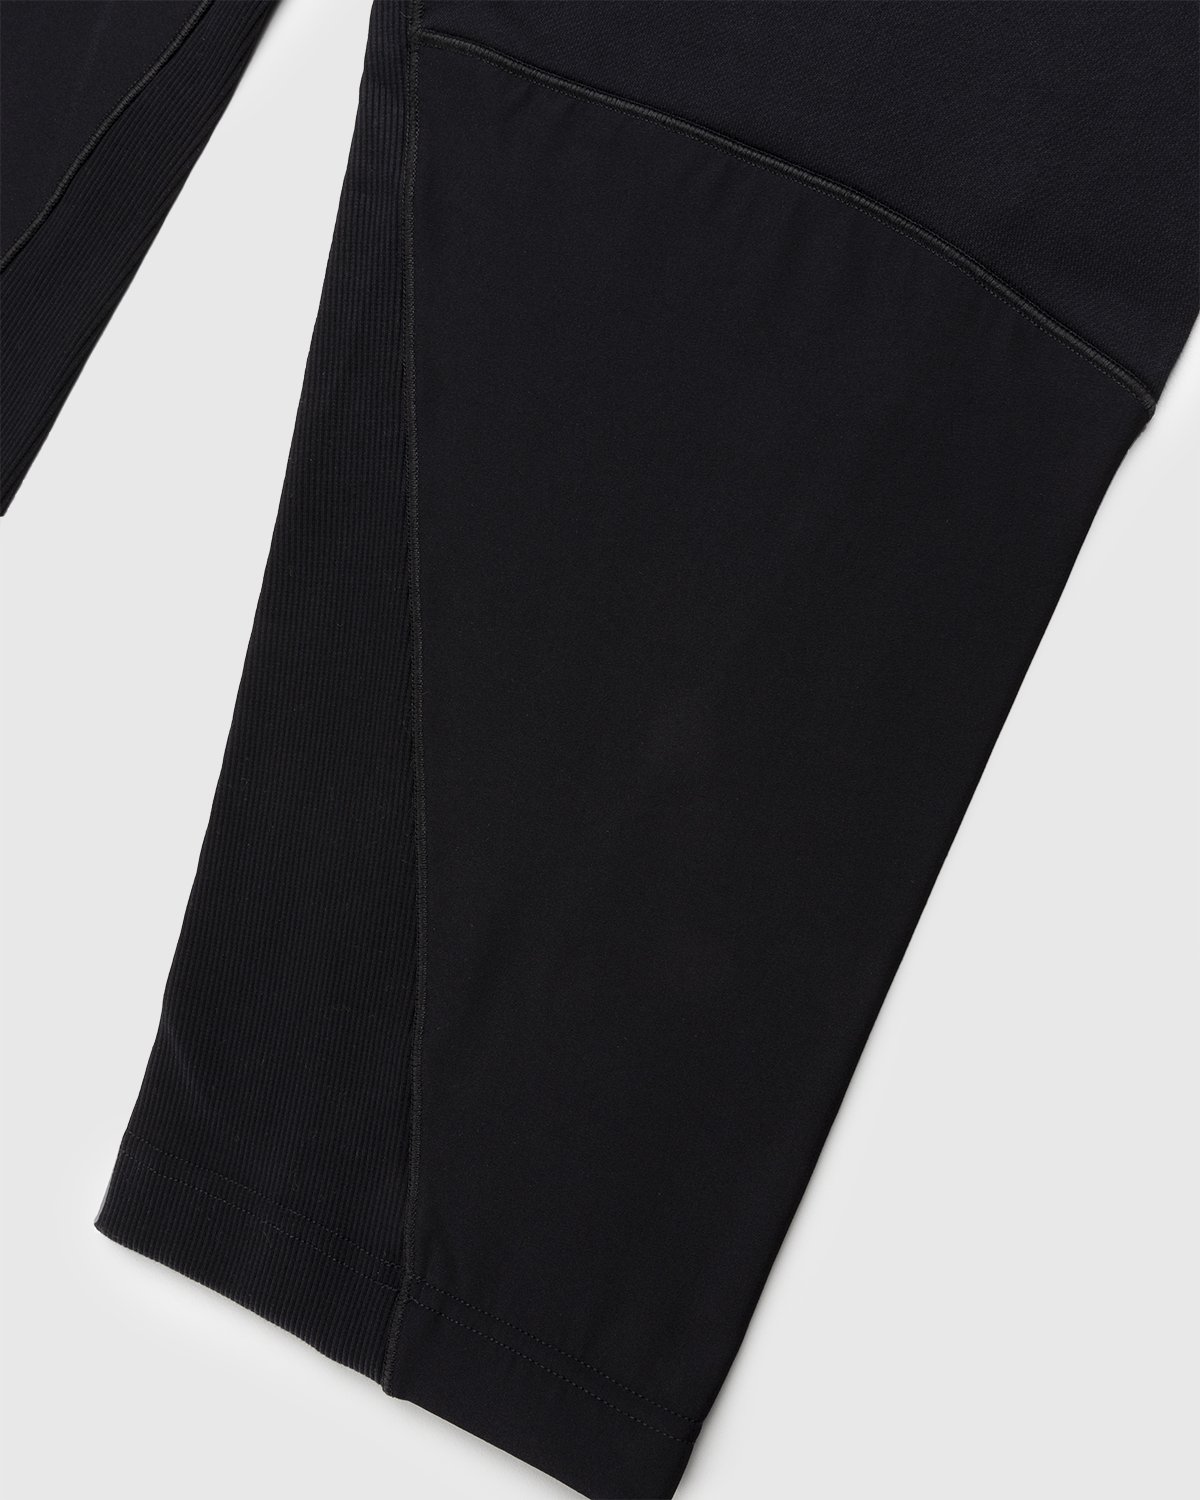 A-Cold-Wall* - Granular Sweatpants Black - Clothing - Black - Image 4